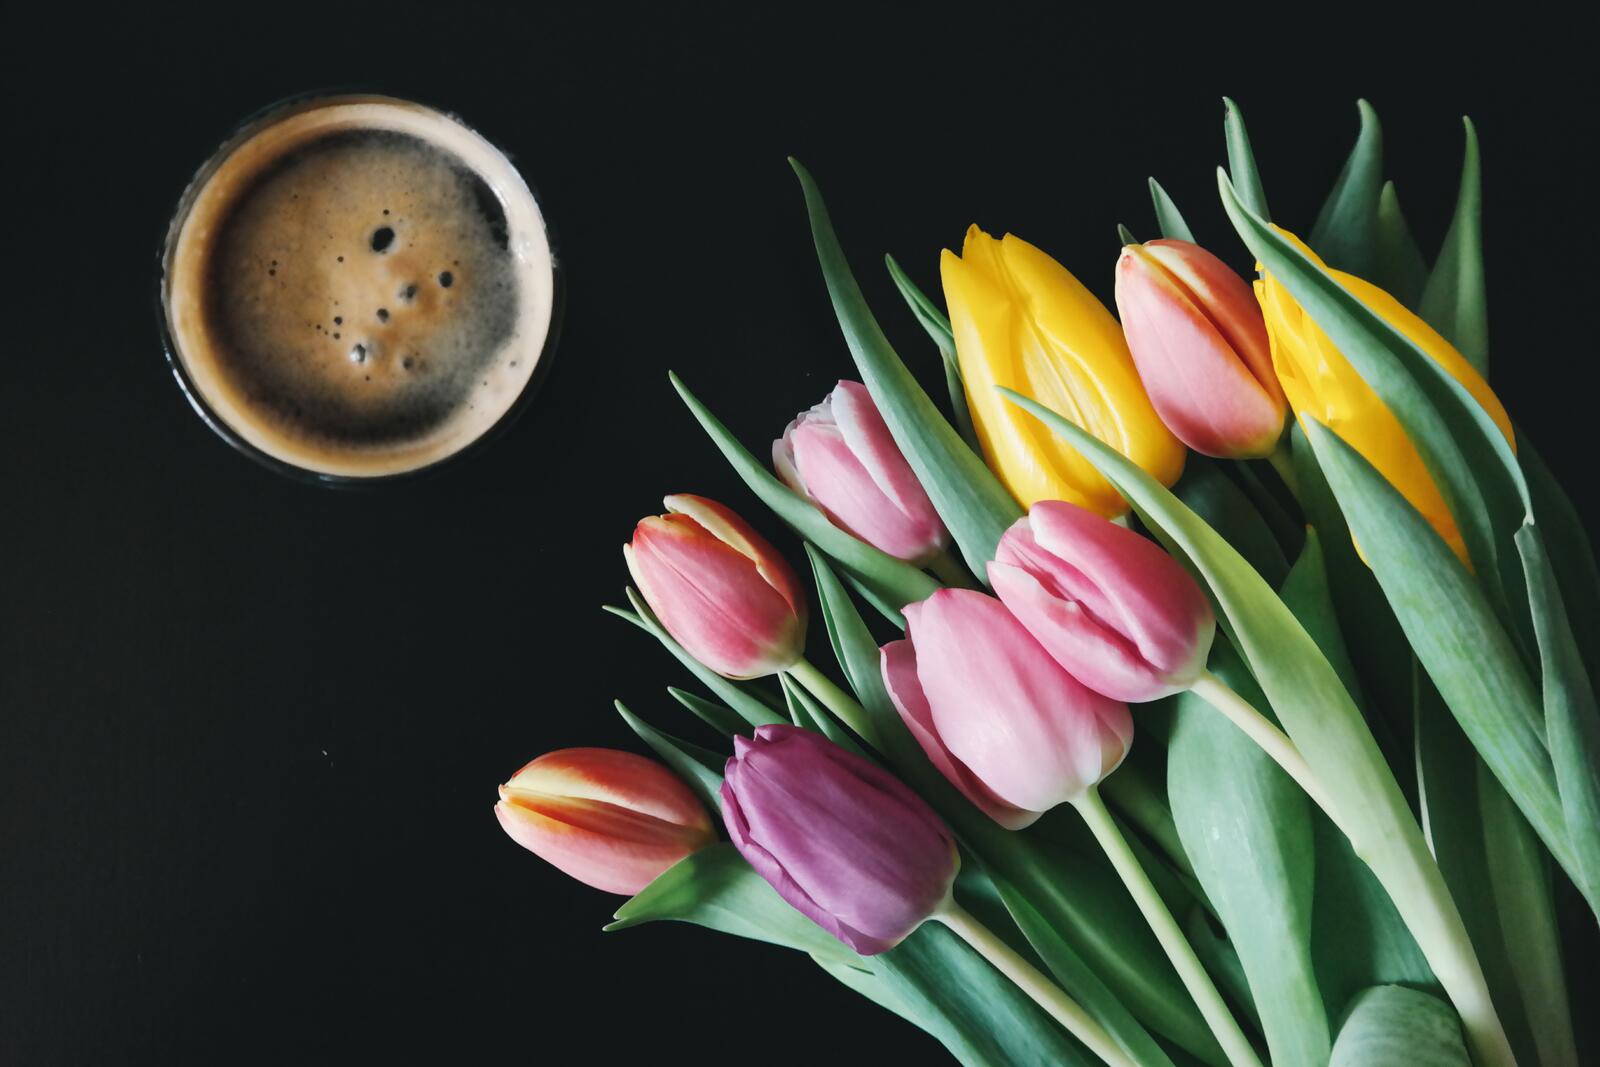 Free photo Tulips with a coffee mug on a black background